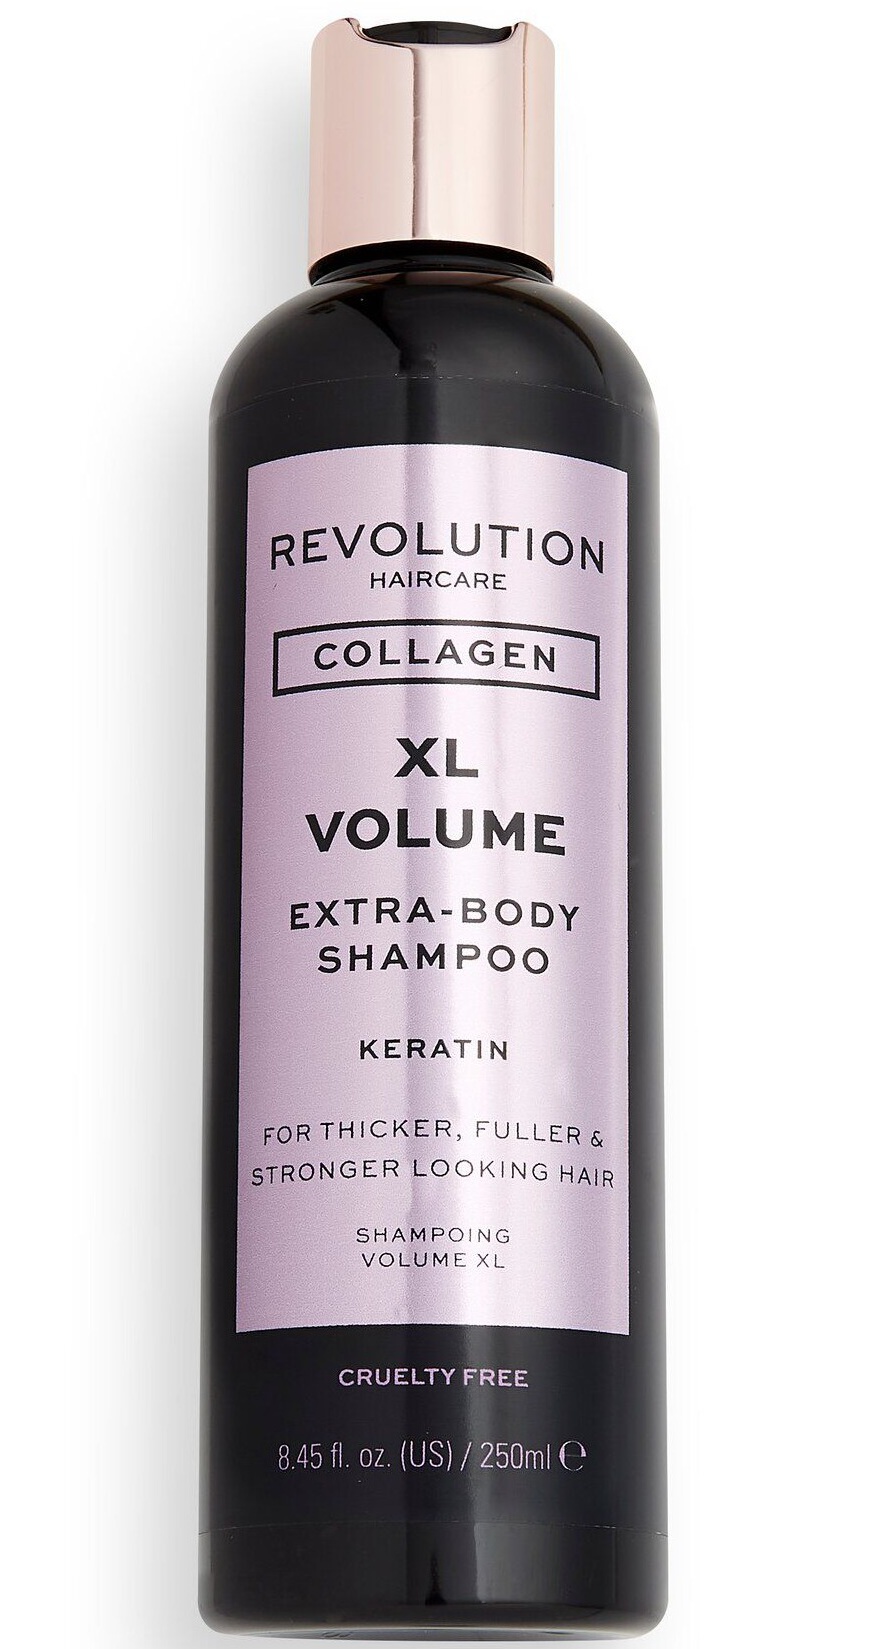 Revolution Haircare Collagen XL Volume Extra-Body Shampoo